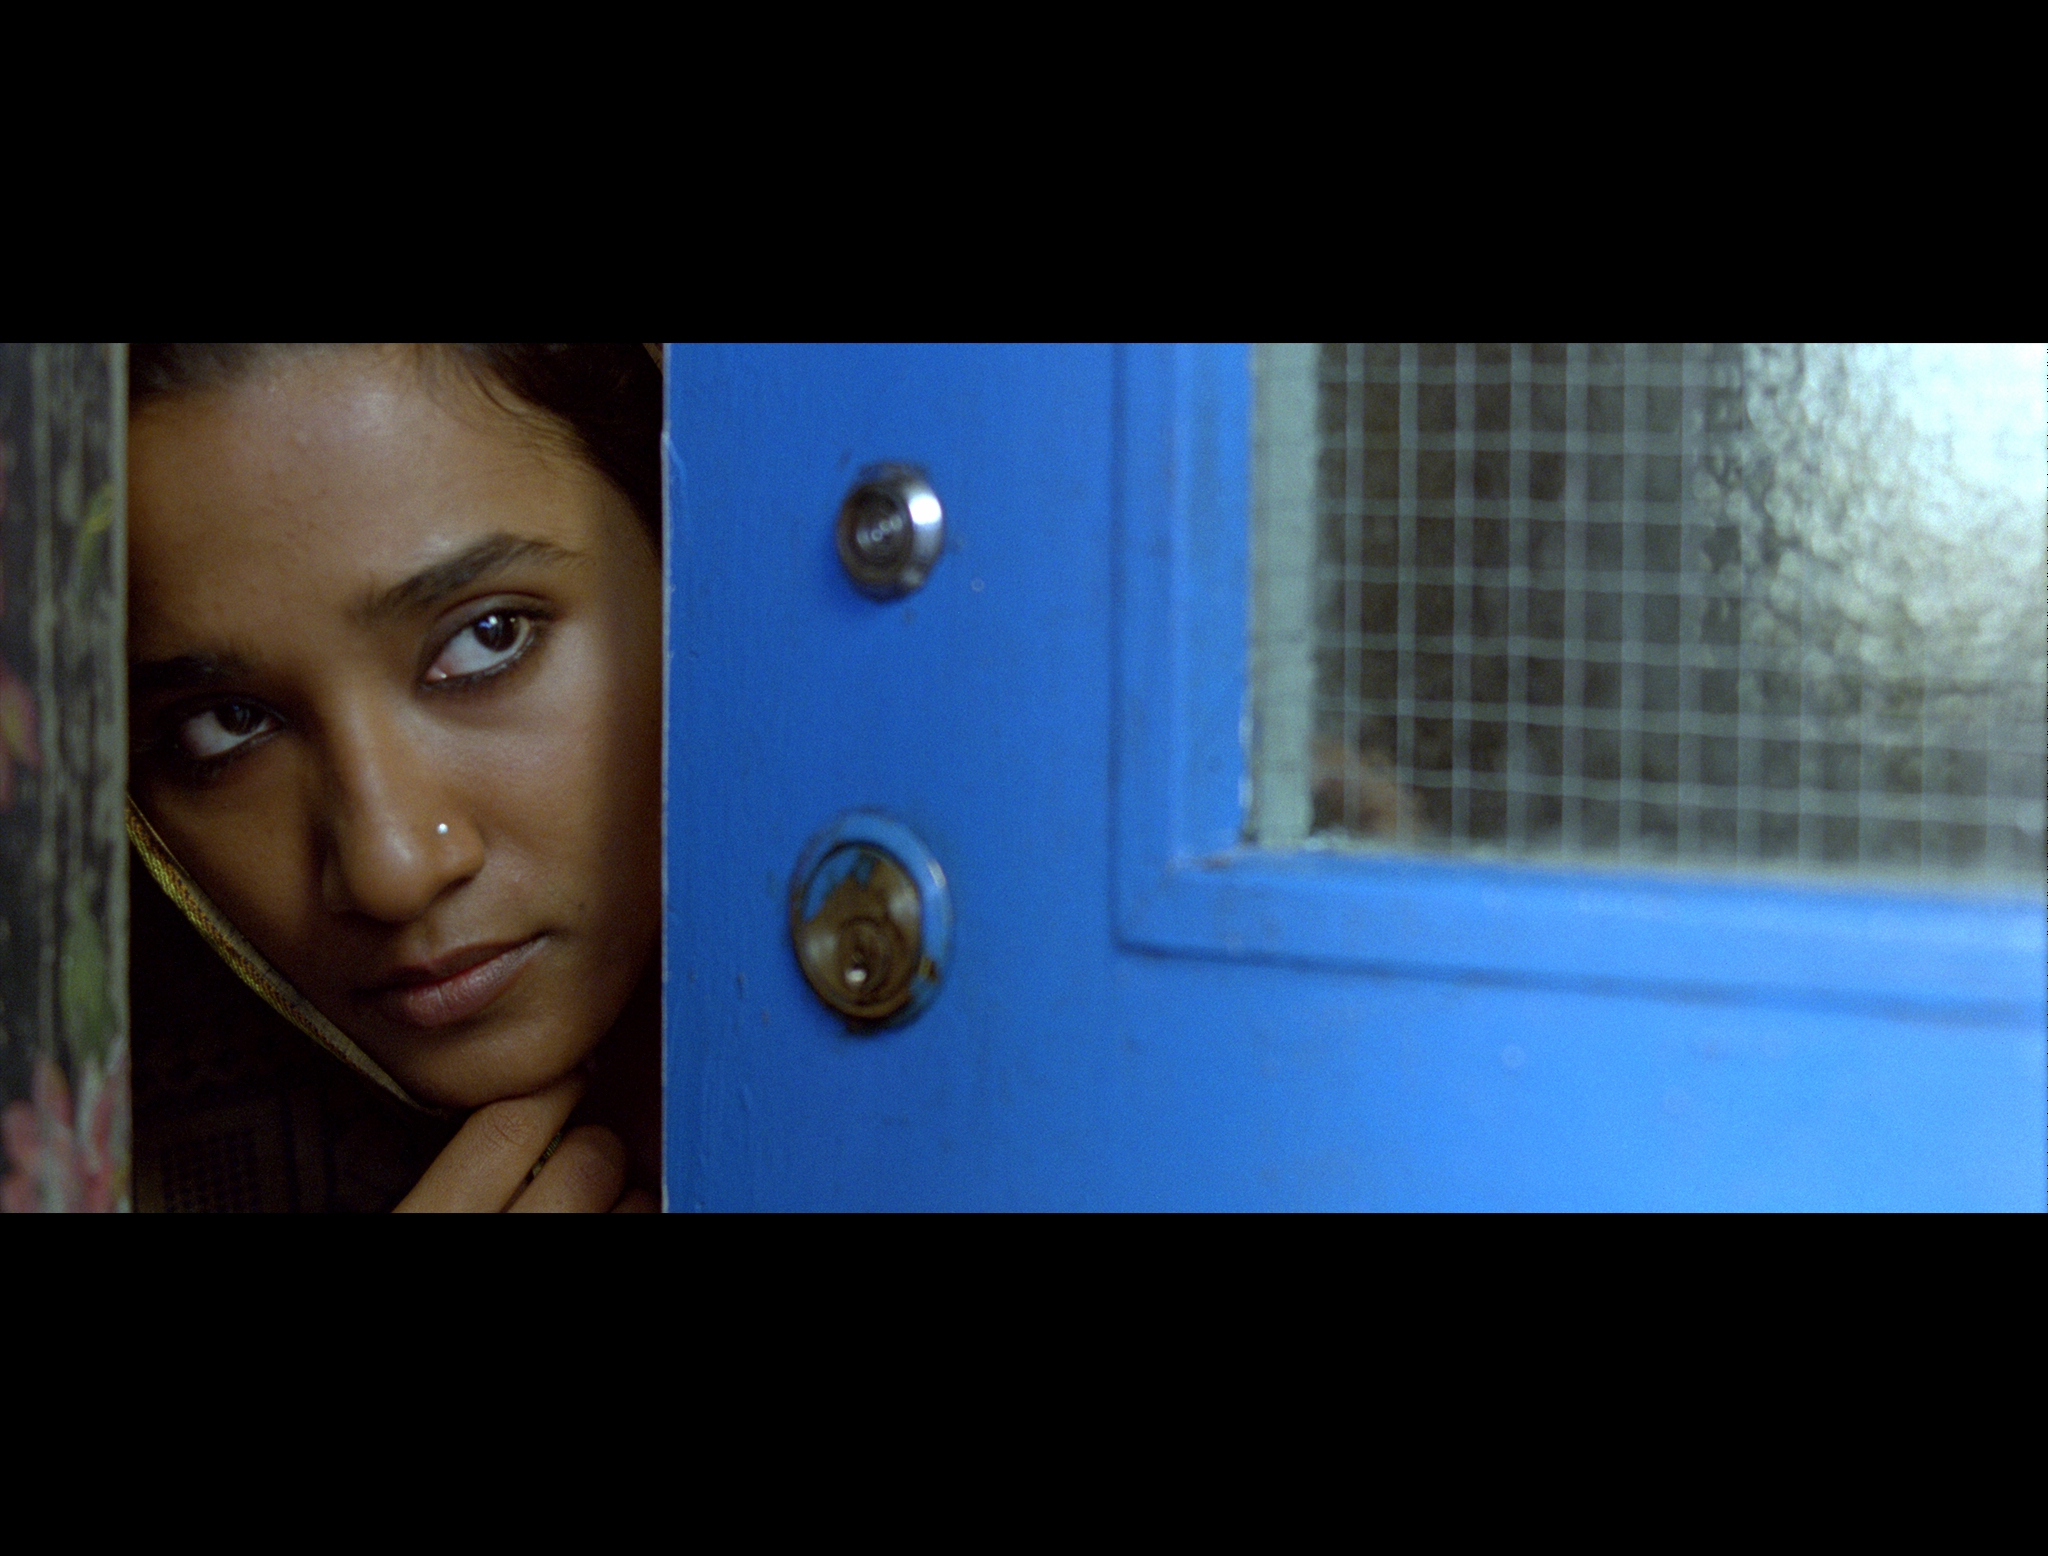 Still of Tannishtha Chatterjee in Brick Lane (2007)